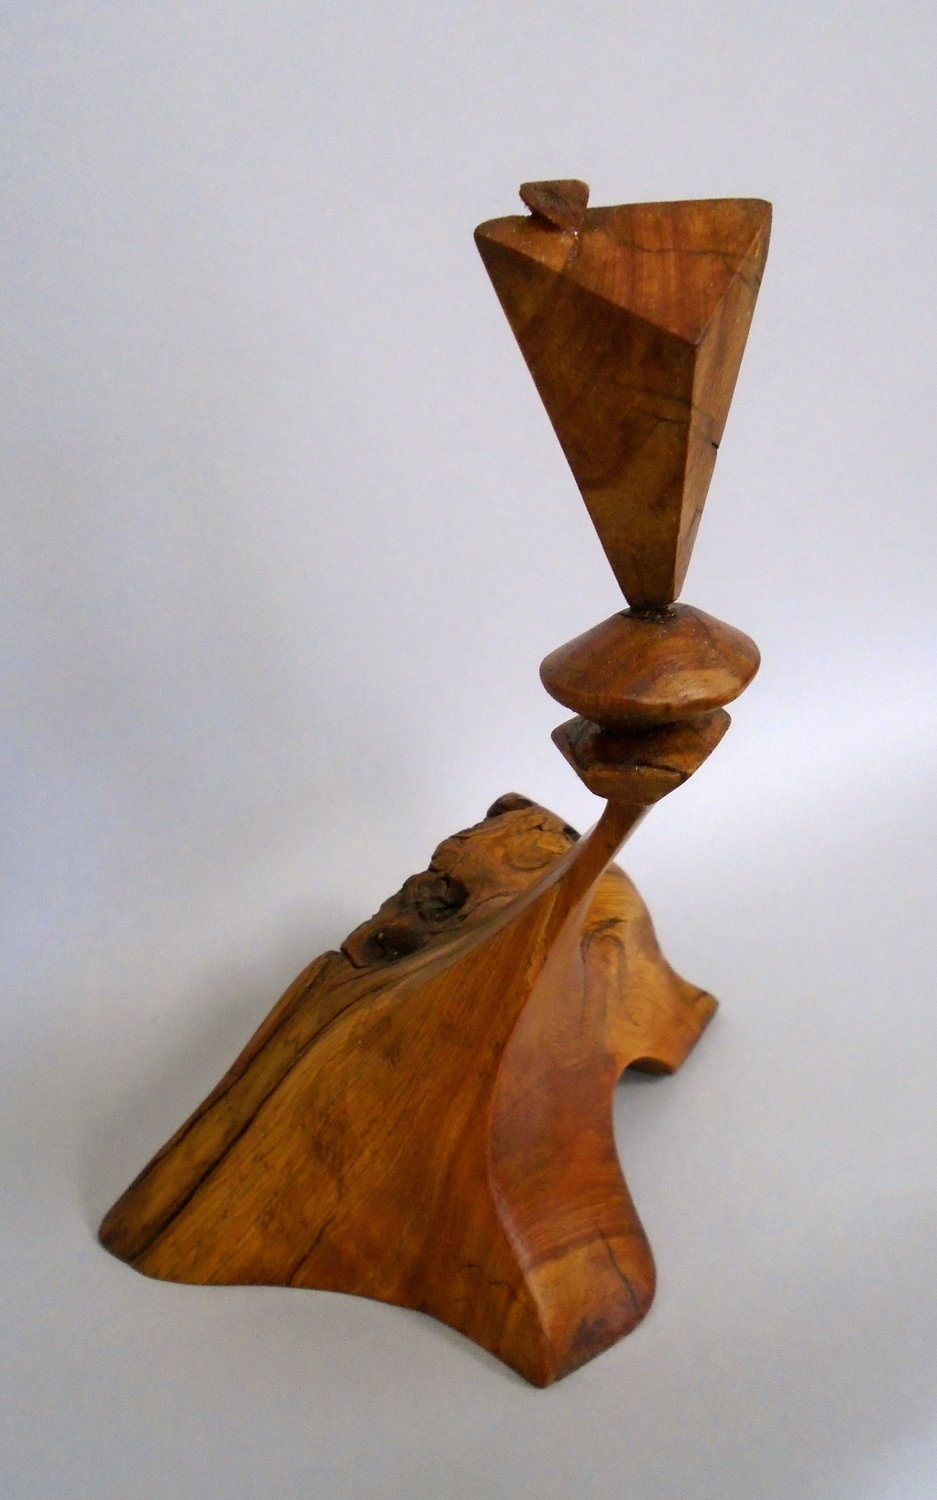 Wood sculpture by Art Peterson